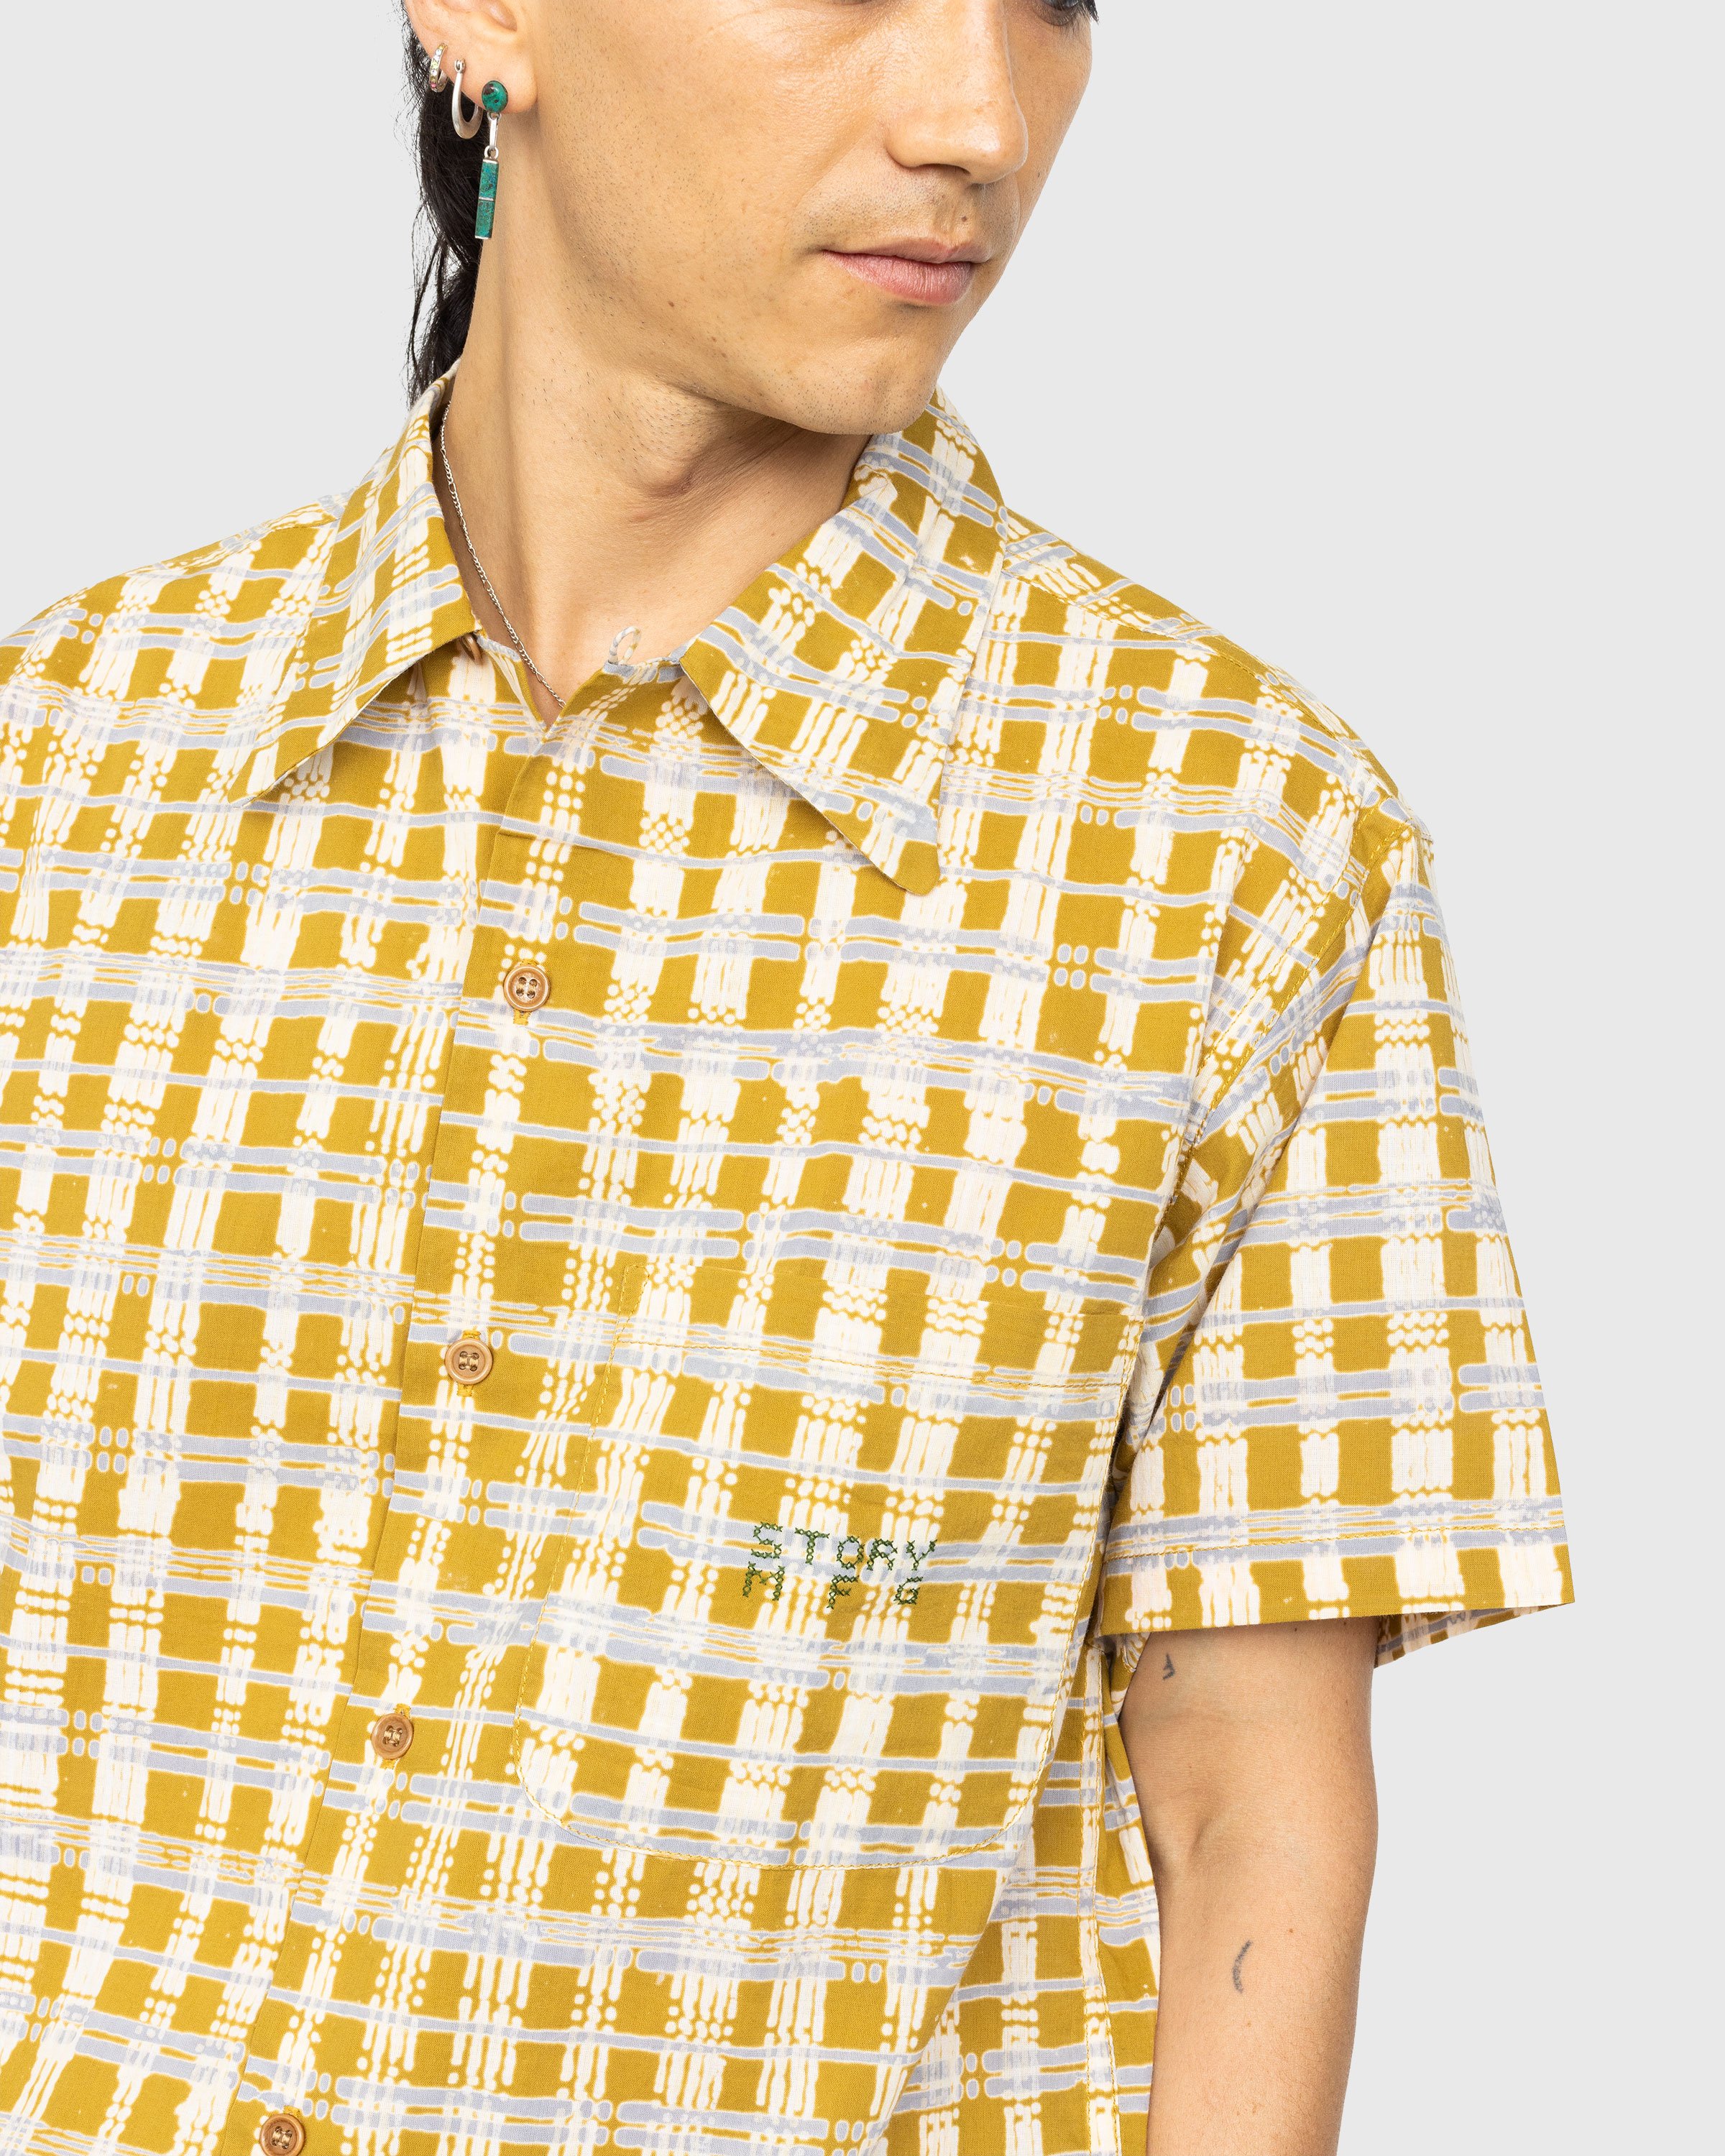 Story mfg. - Shore Shirt Check Block - Clothing - Yellow - Image 4